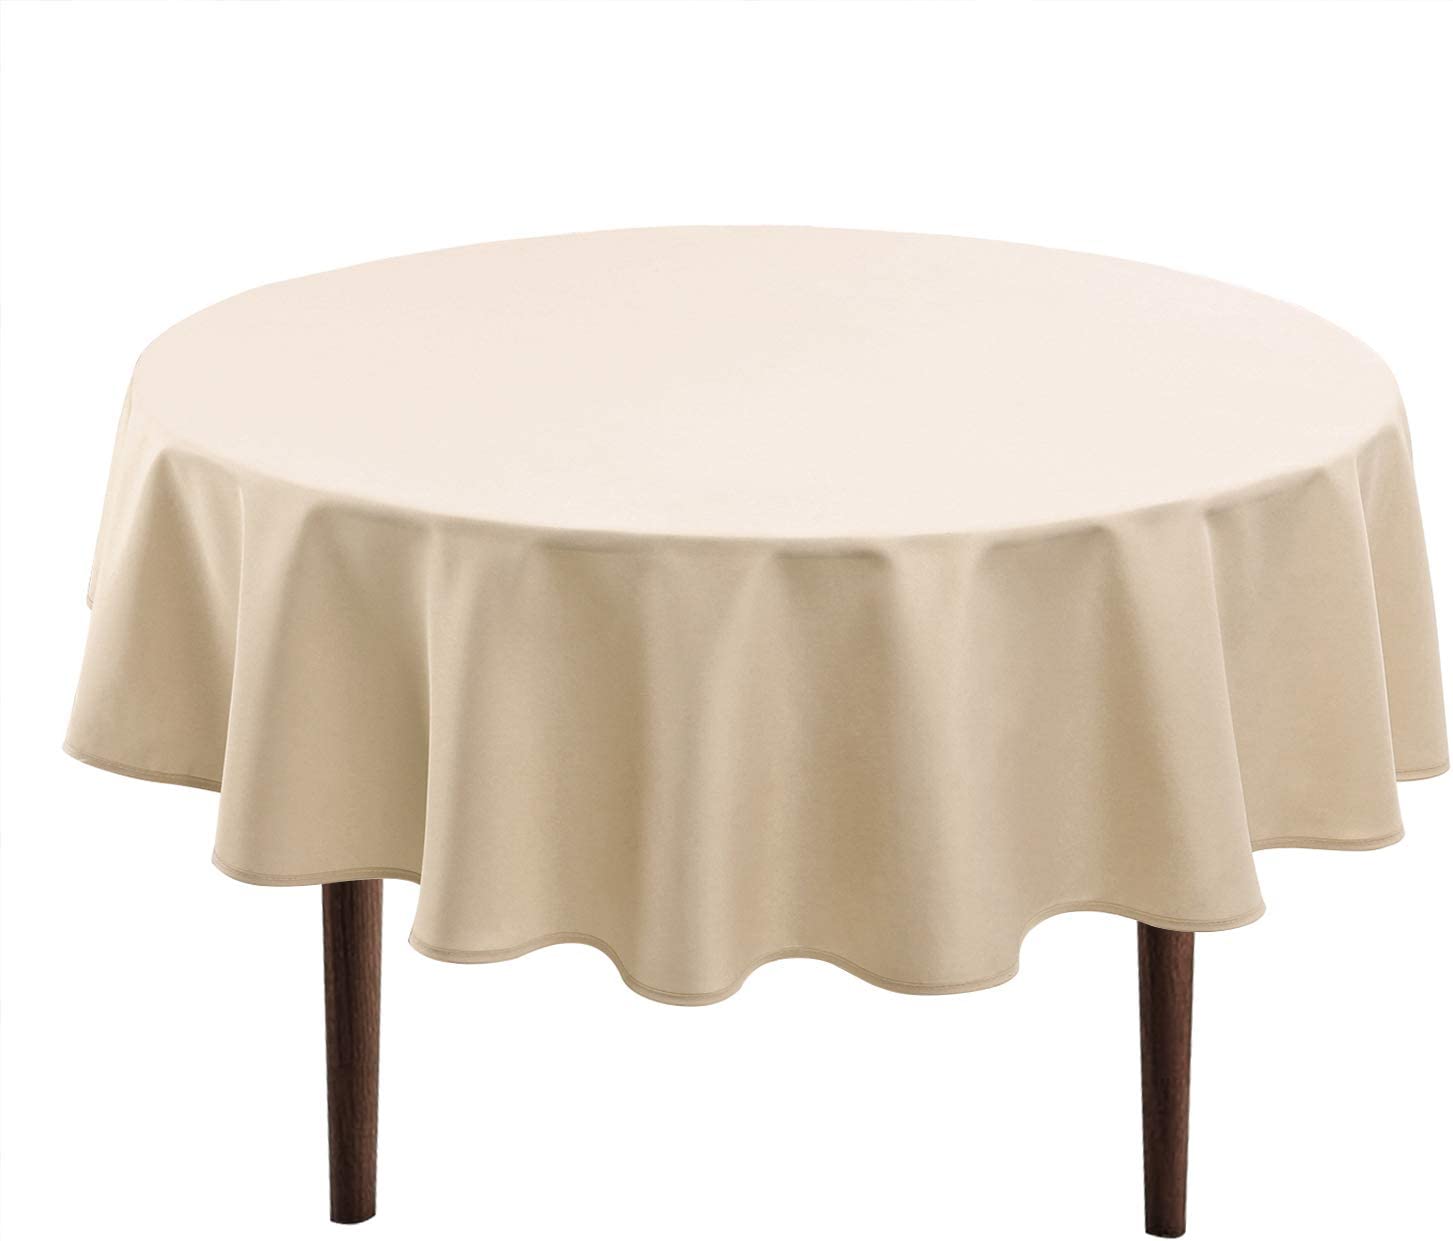 60 Inch Round Tablecloth Waterproof Beige